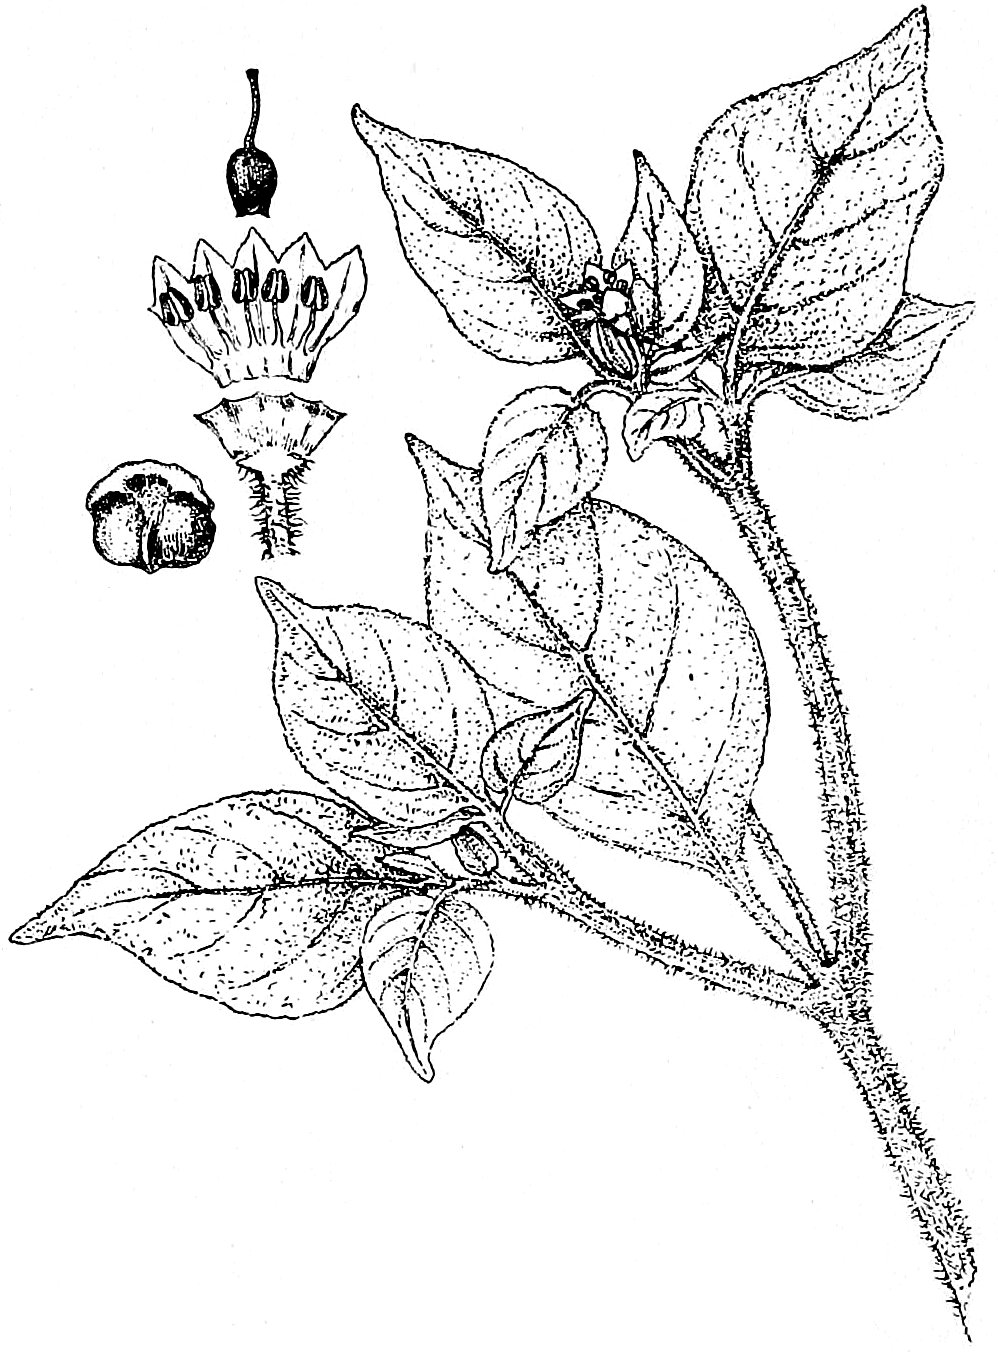 Illustration Capsicum galapagoense, Par Fernando Schuyler Mathews (domaine public), via wikimedia 